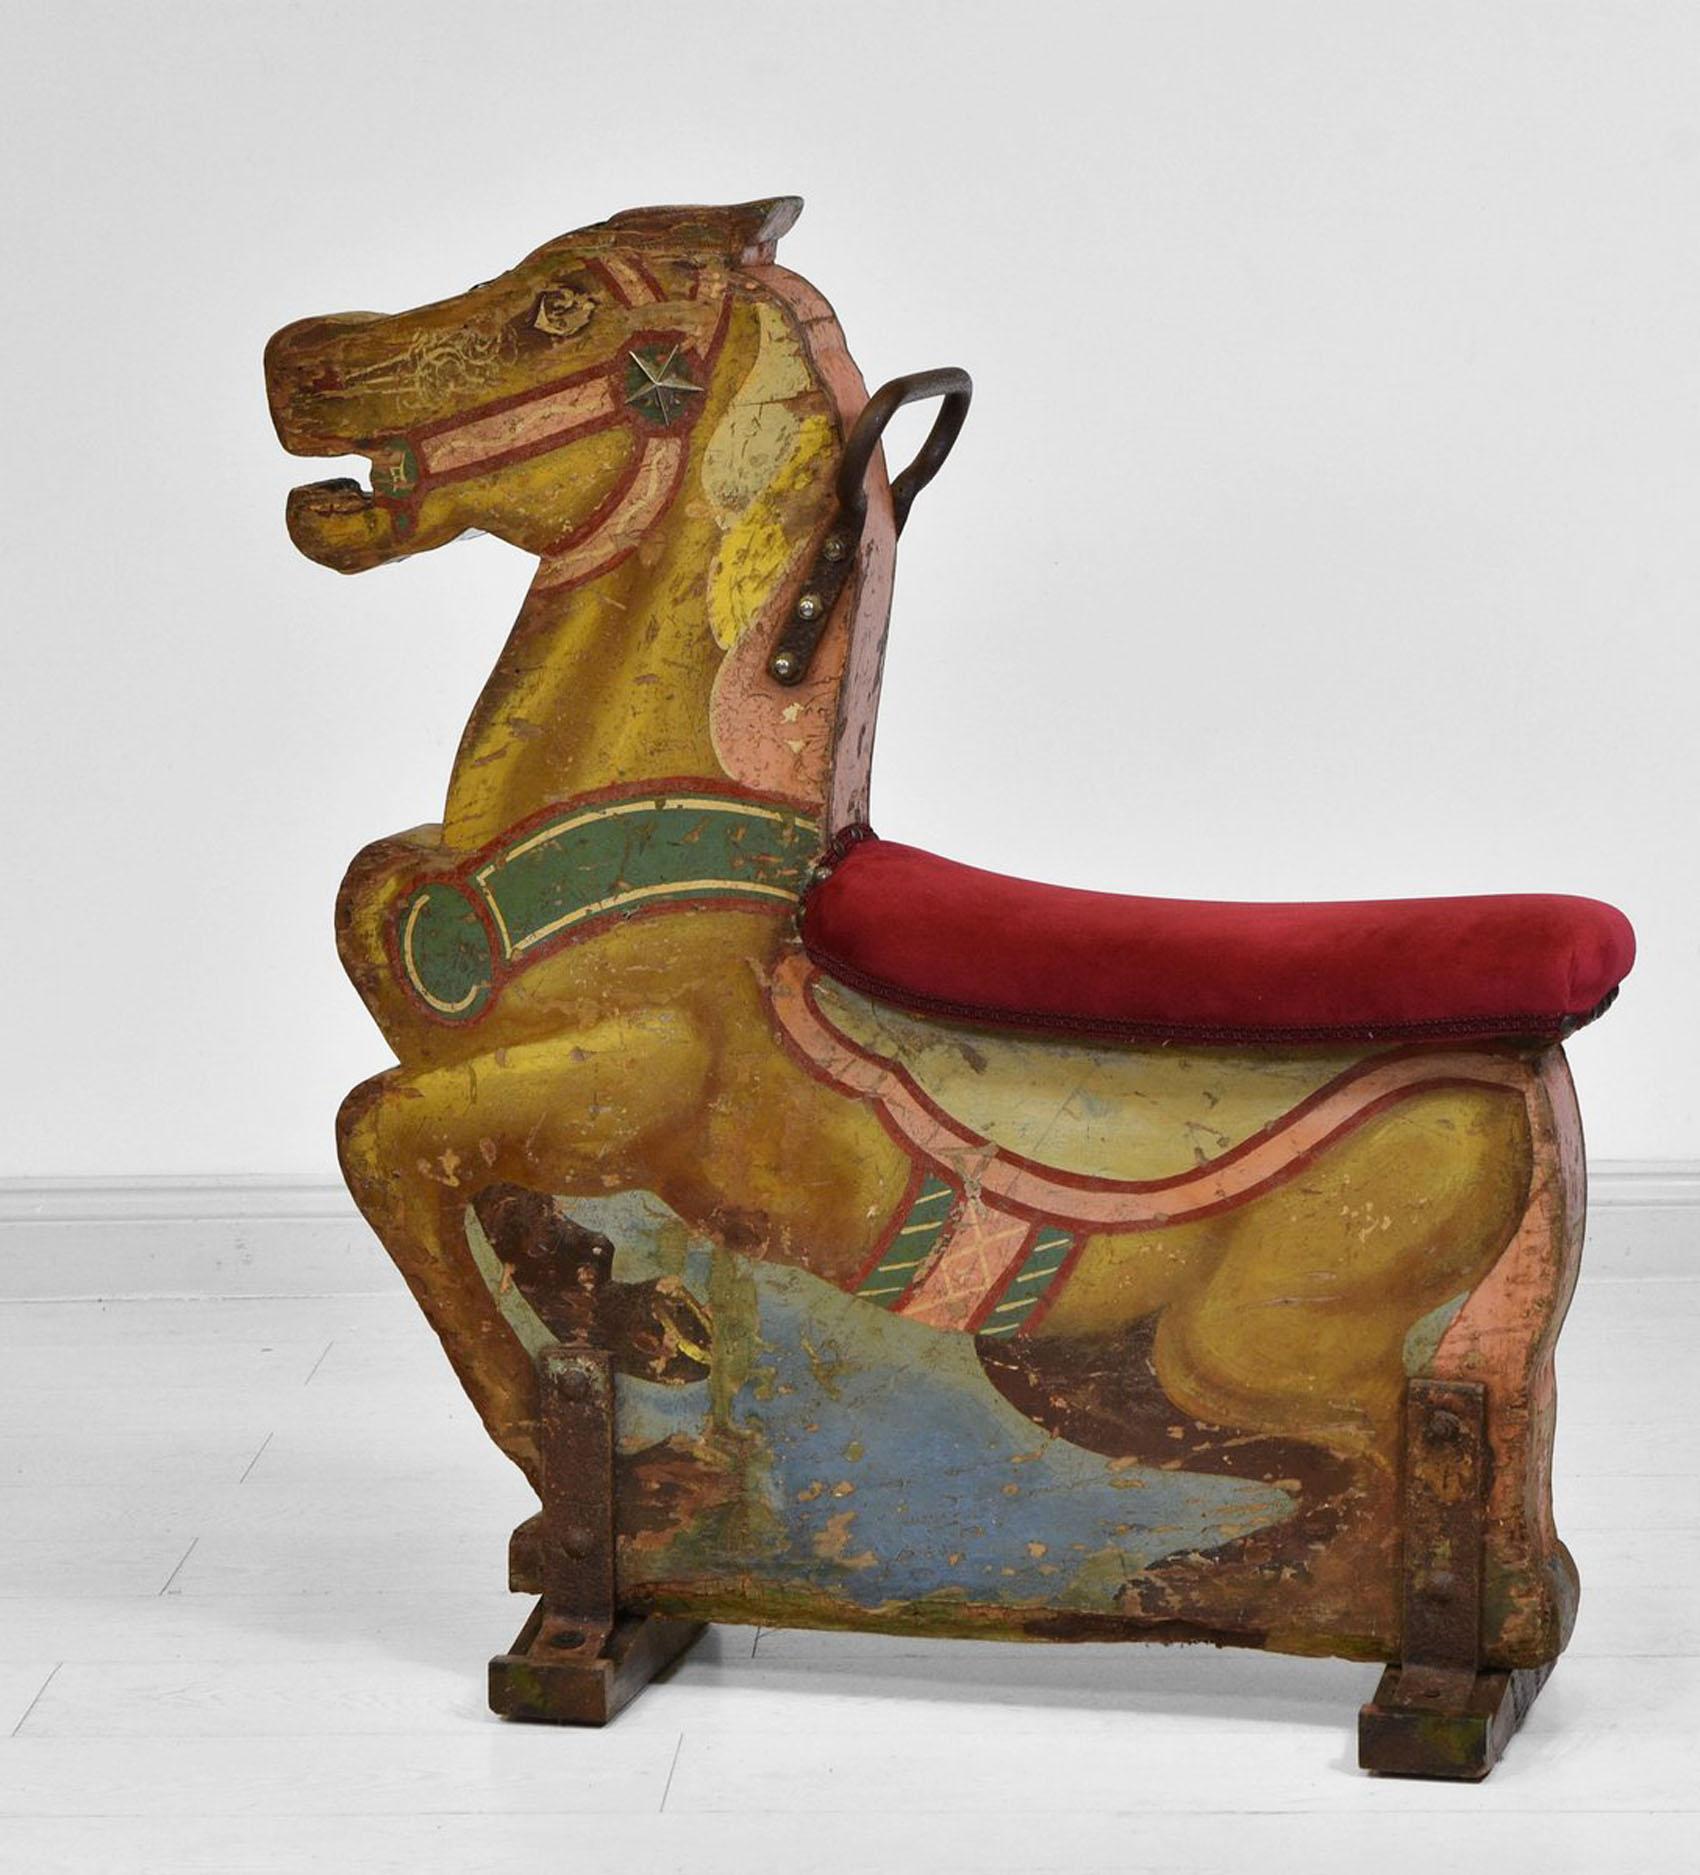 Fairground Merry Go Round Carousel Ride Wooden Decorative Horse Velvet Seat 4